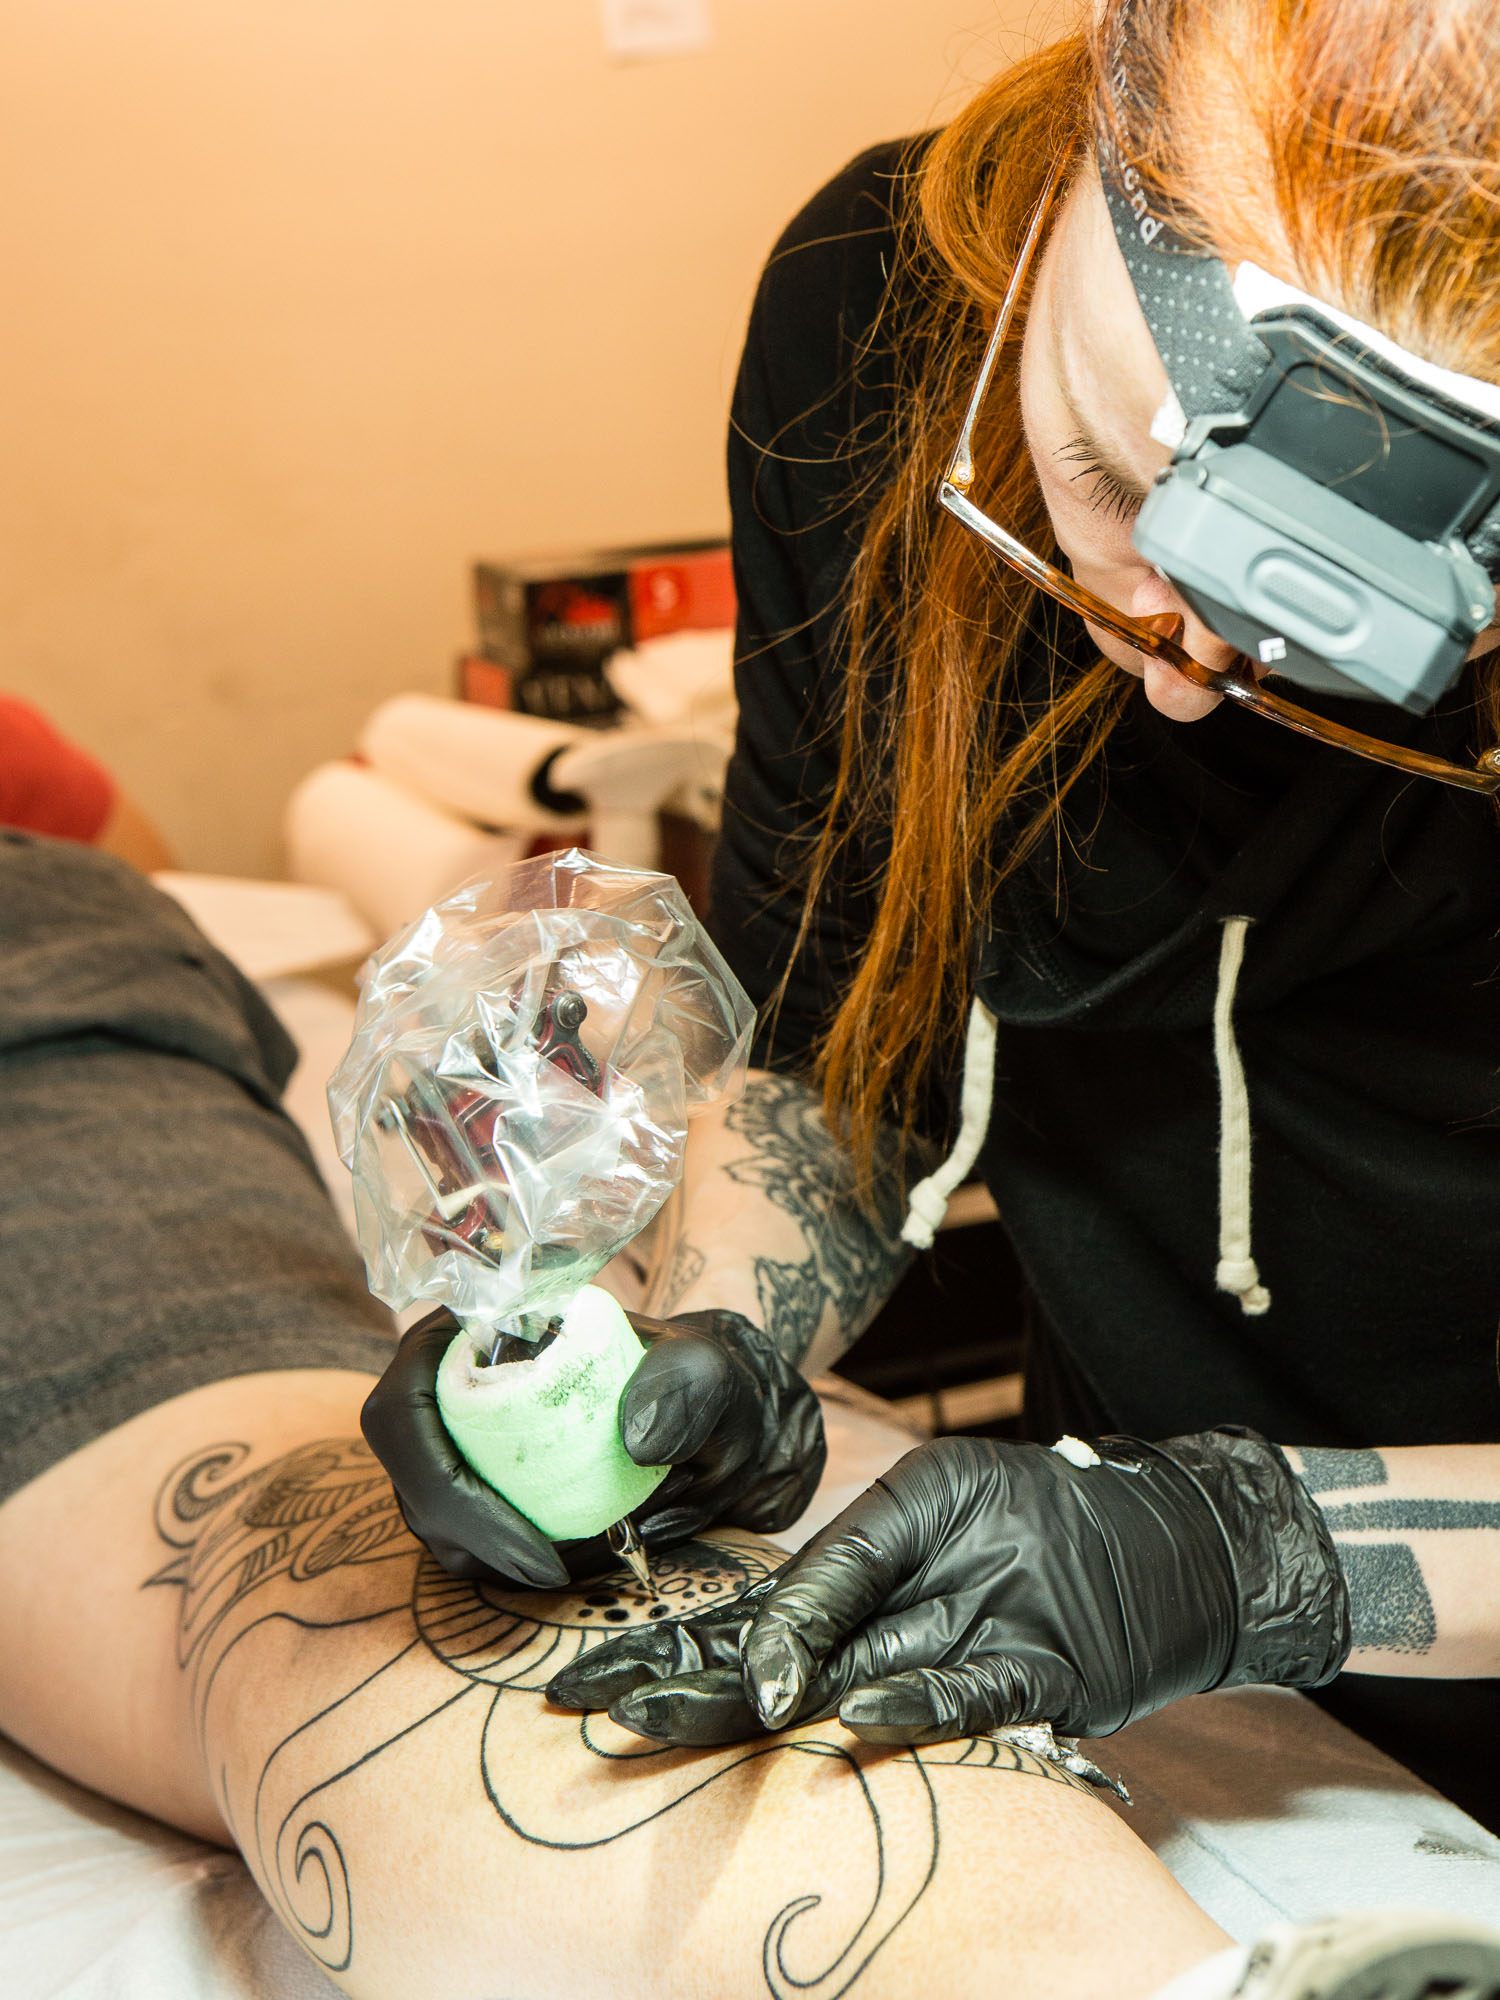 Tattoo artist Julianna Menna at work on a tattoo of an octopus at Gristle Tattoo in Williamsburg.